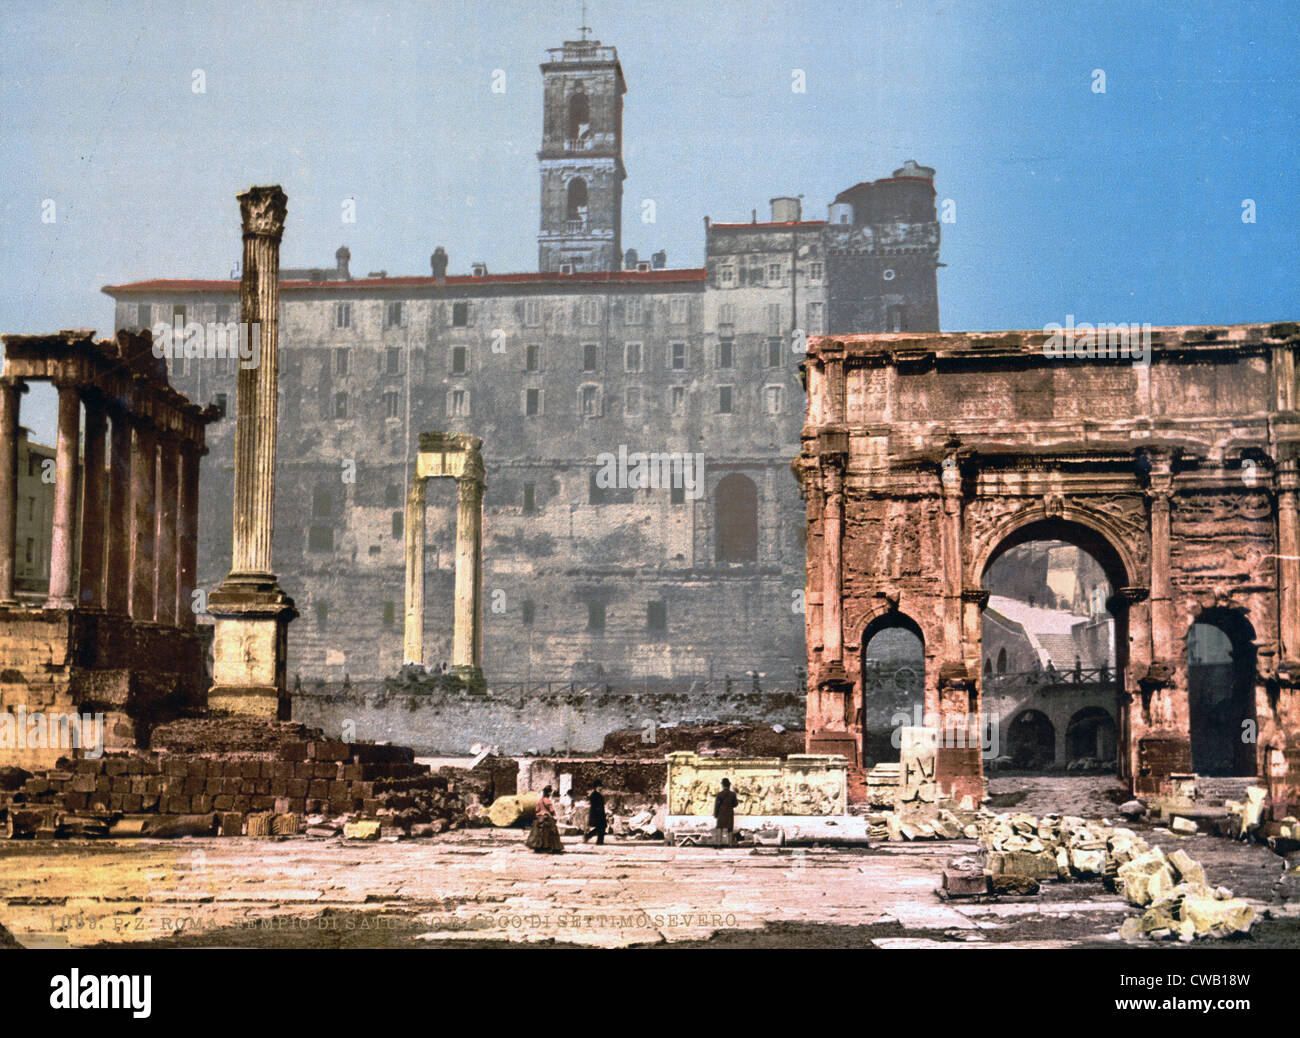 Rom, die Spalte des Phokas und der Bogen des Septimius Severus auf dem Forum Romanum, Rom, Italien; Farbe Photochrom ca 1890 s Stockfoto